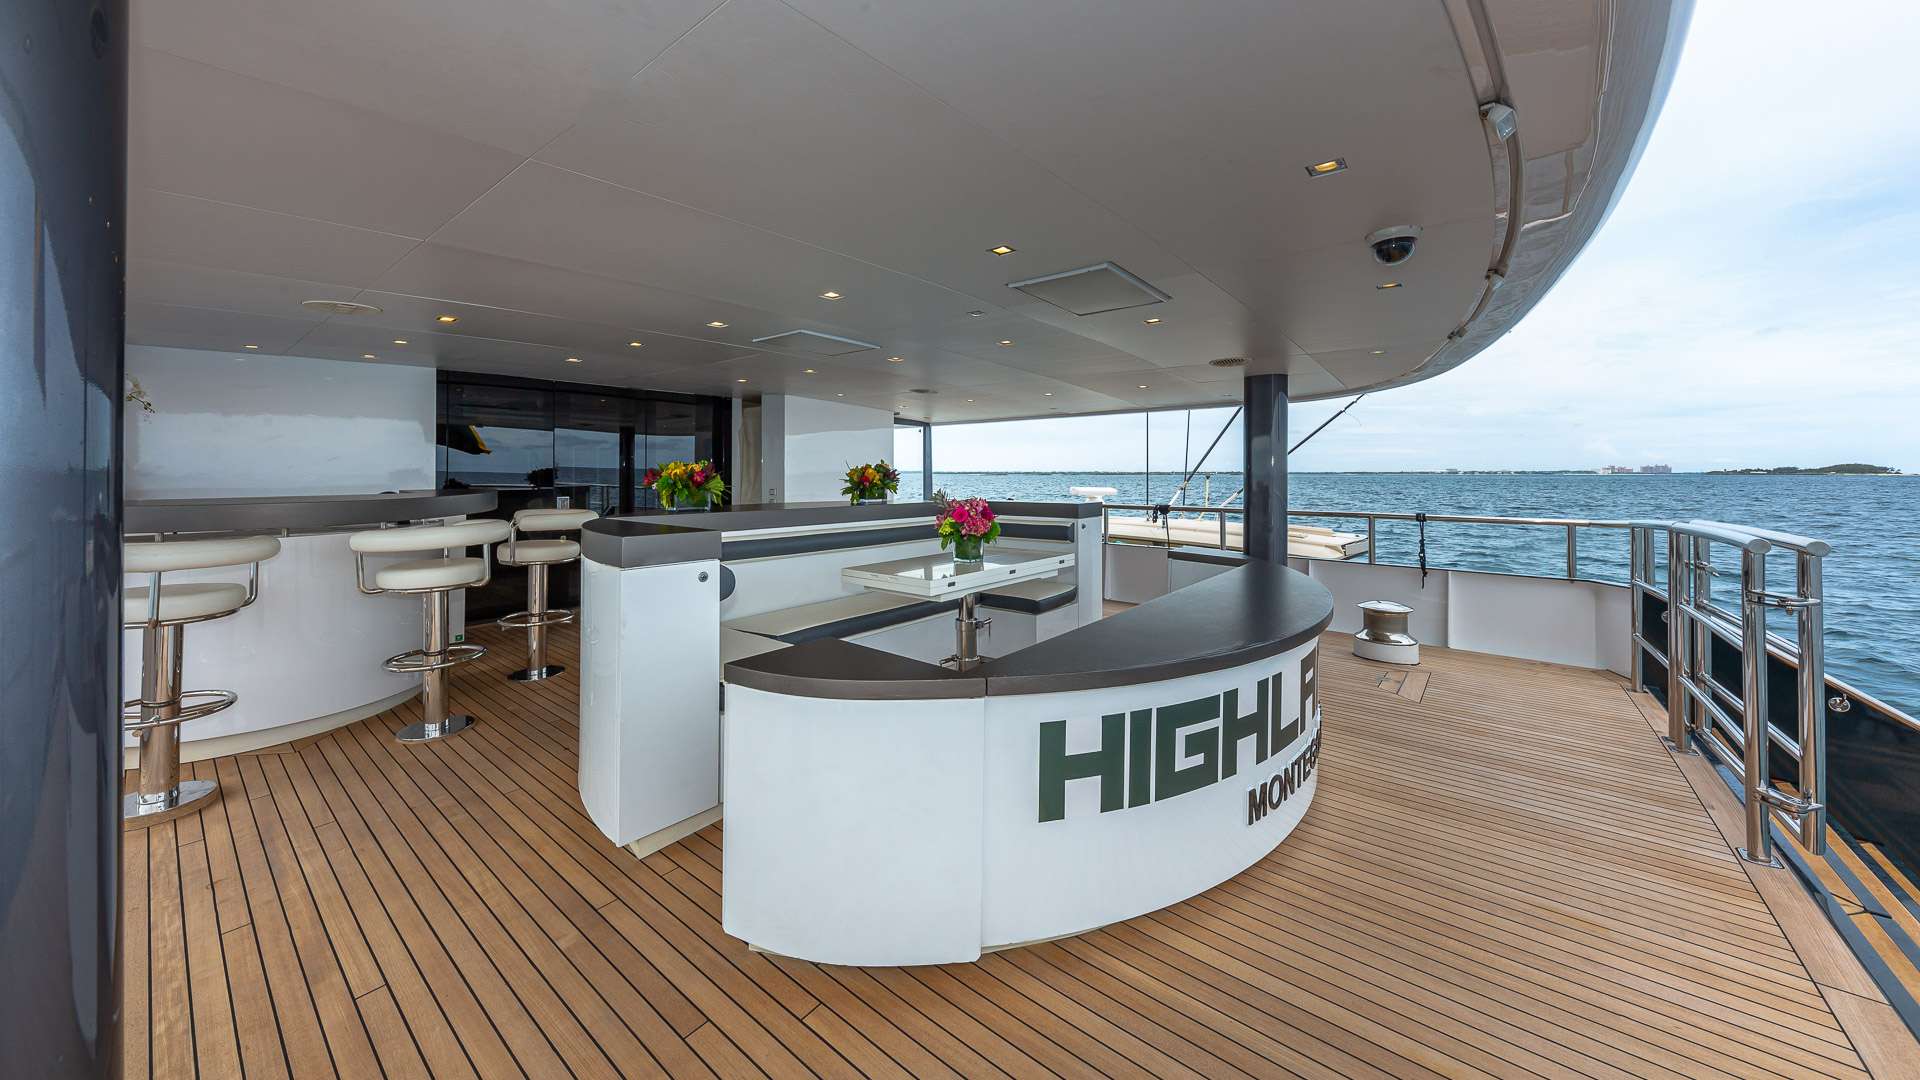 HIGHLANDER - Superyacht charter US Virgin Islands & Boat hire in Caribbean, Bahamas, Florida East Coast, Cuba, Dominican Republic, Turks and Caicos, USA South East 5